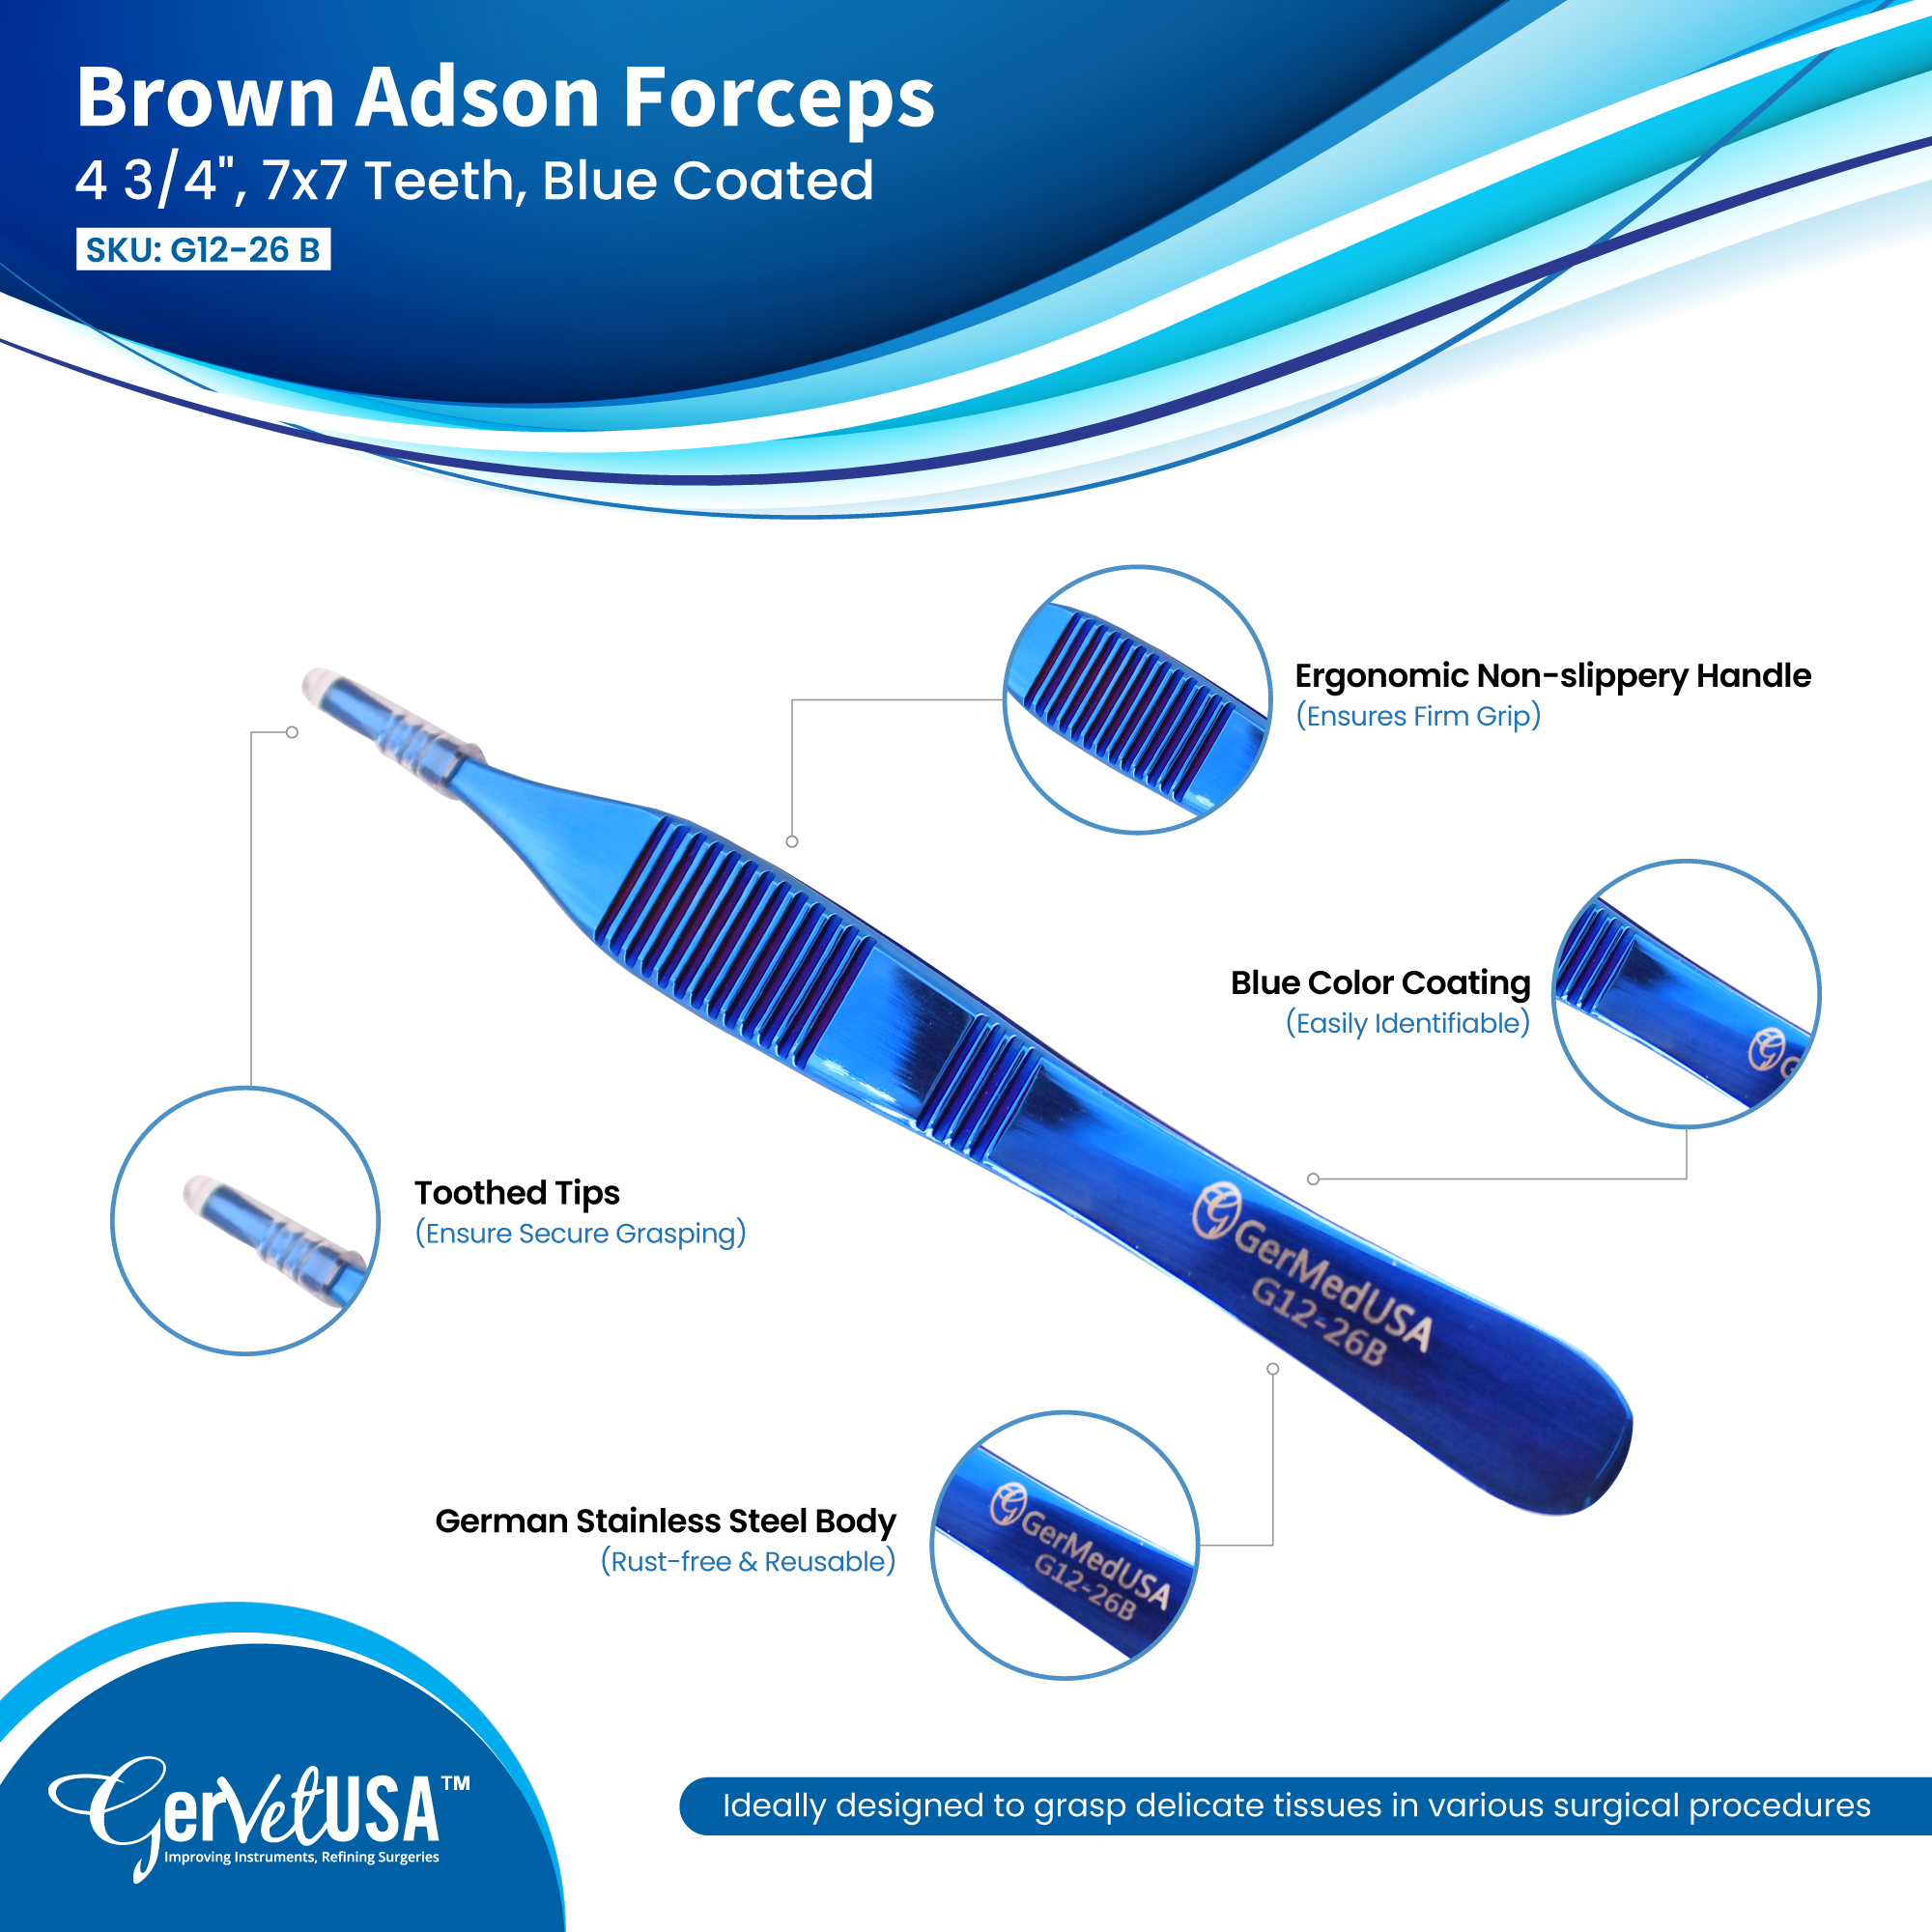 Brown Adson Forceps 4 3/4", 7x7 Teeth, Blue Coated